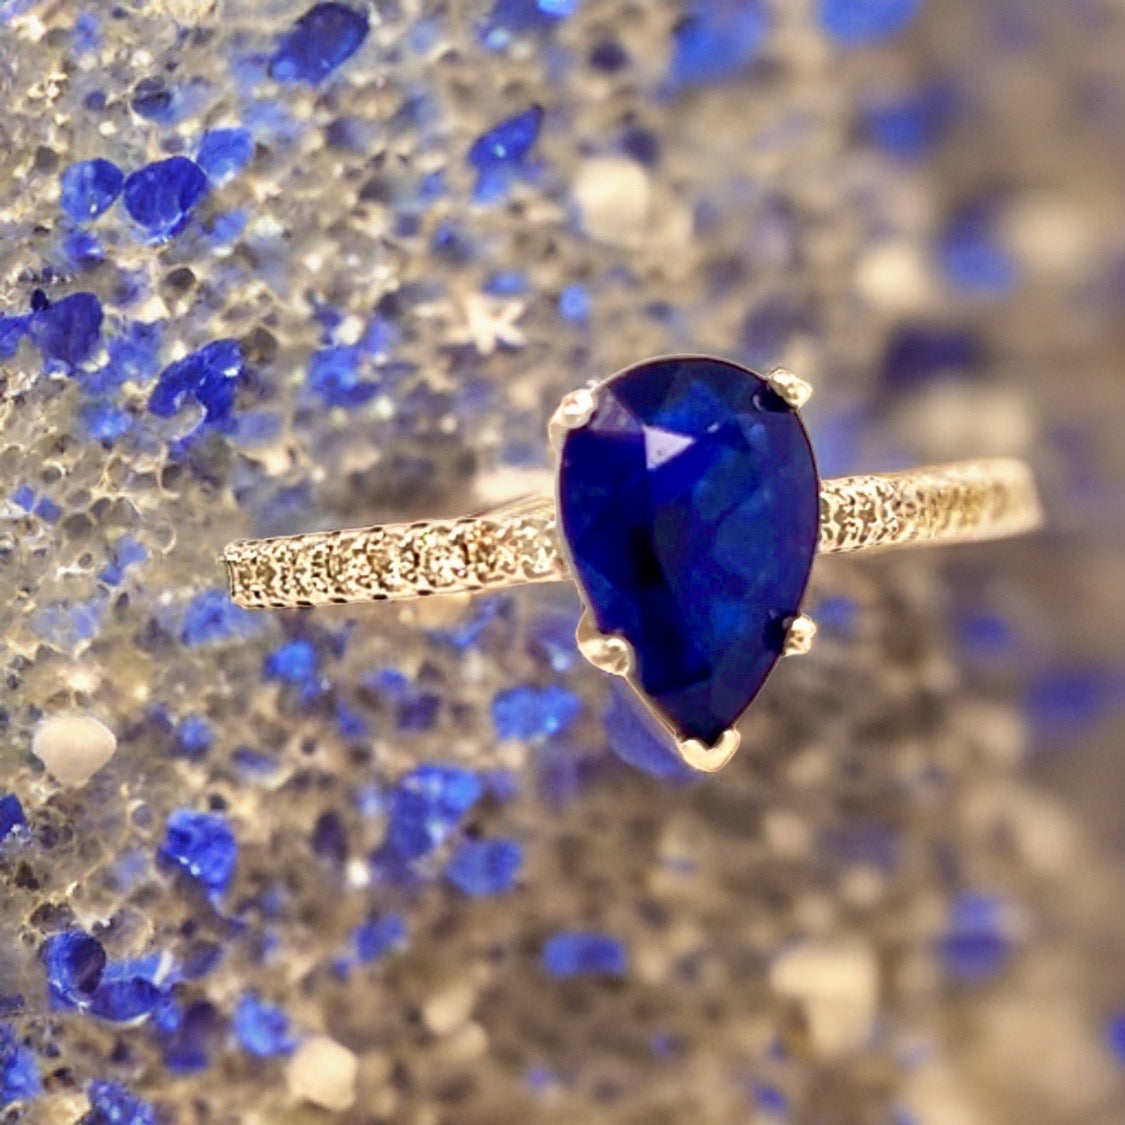 Sapphire Diamond Ring Size 6.5 14k Gold 2.77 TCW Certified $2,675 215415 - Certified Fine Jewelry